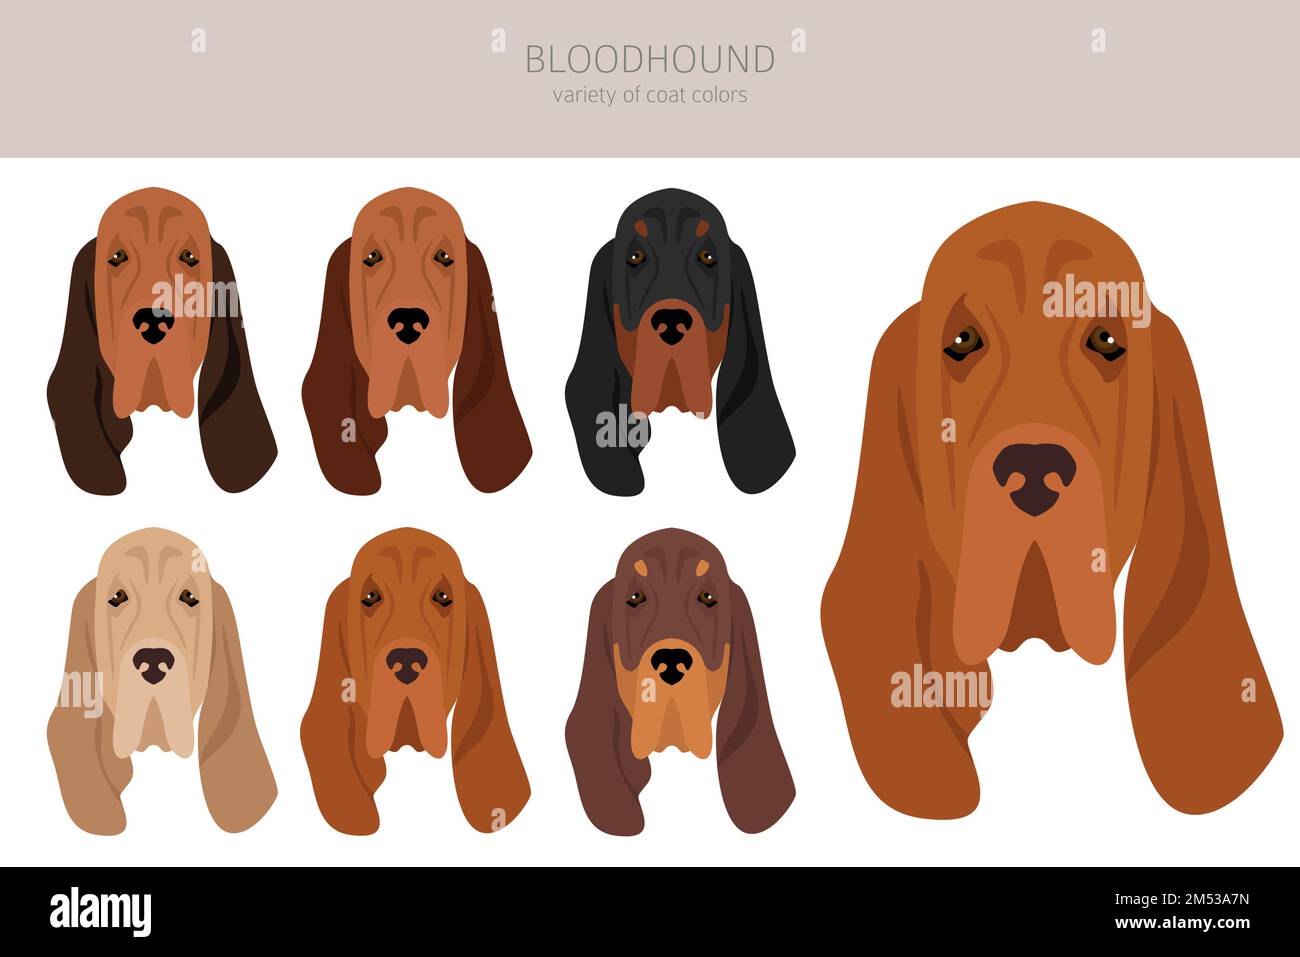 Bluthund-Clipart. Alle Mantelfarben eingestellt. Andere Position. Infografik zu den Merkmalen aller Hunderassen. Vektordarstellung Stock Vektor